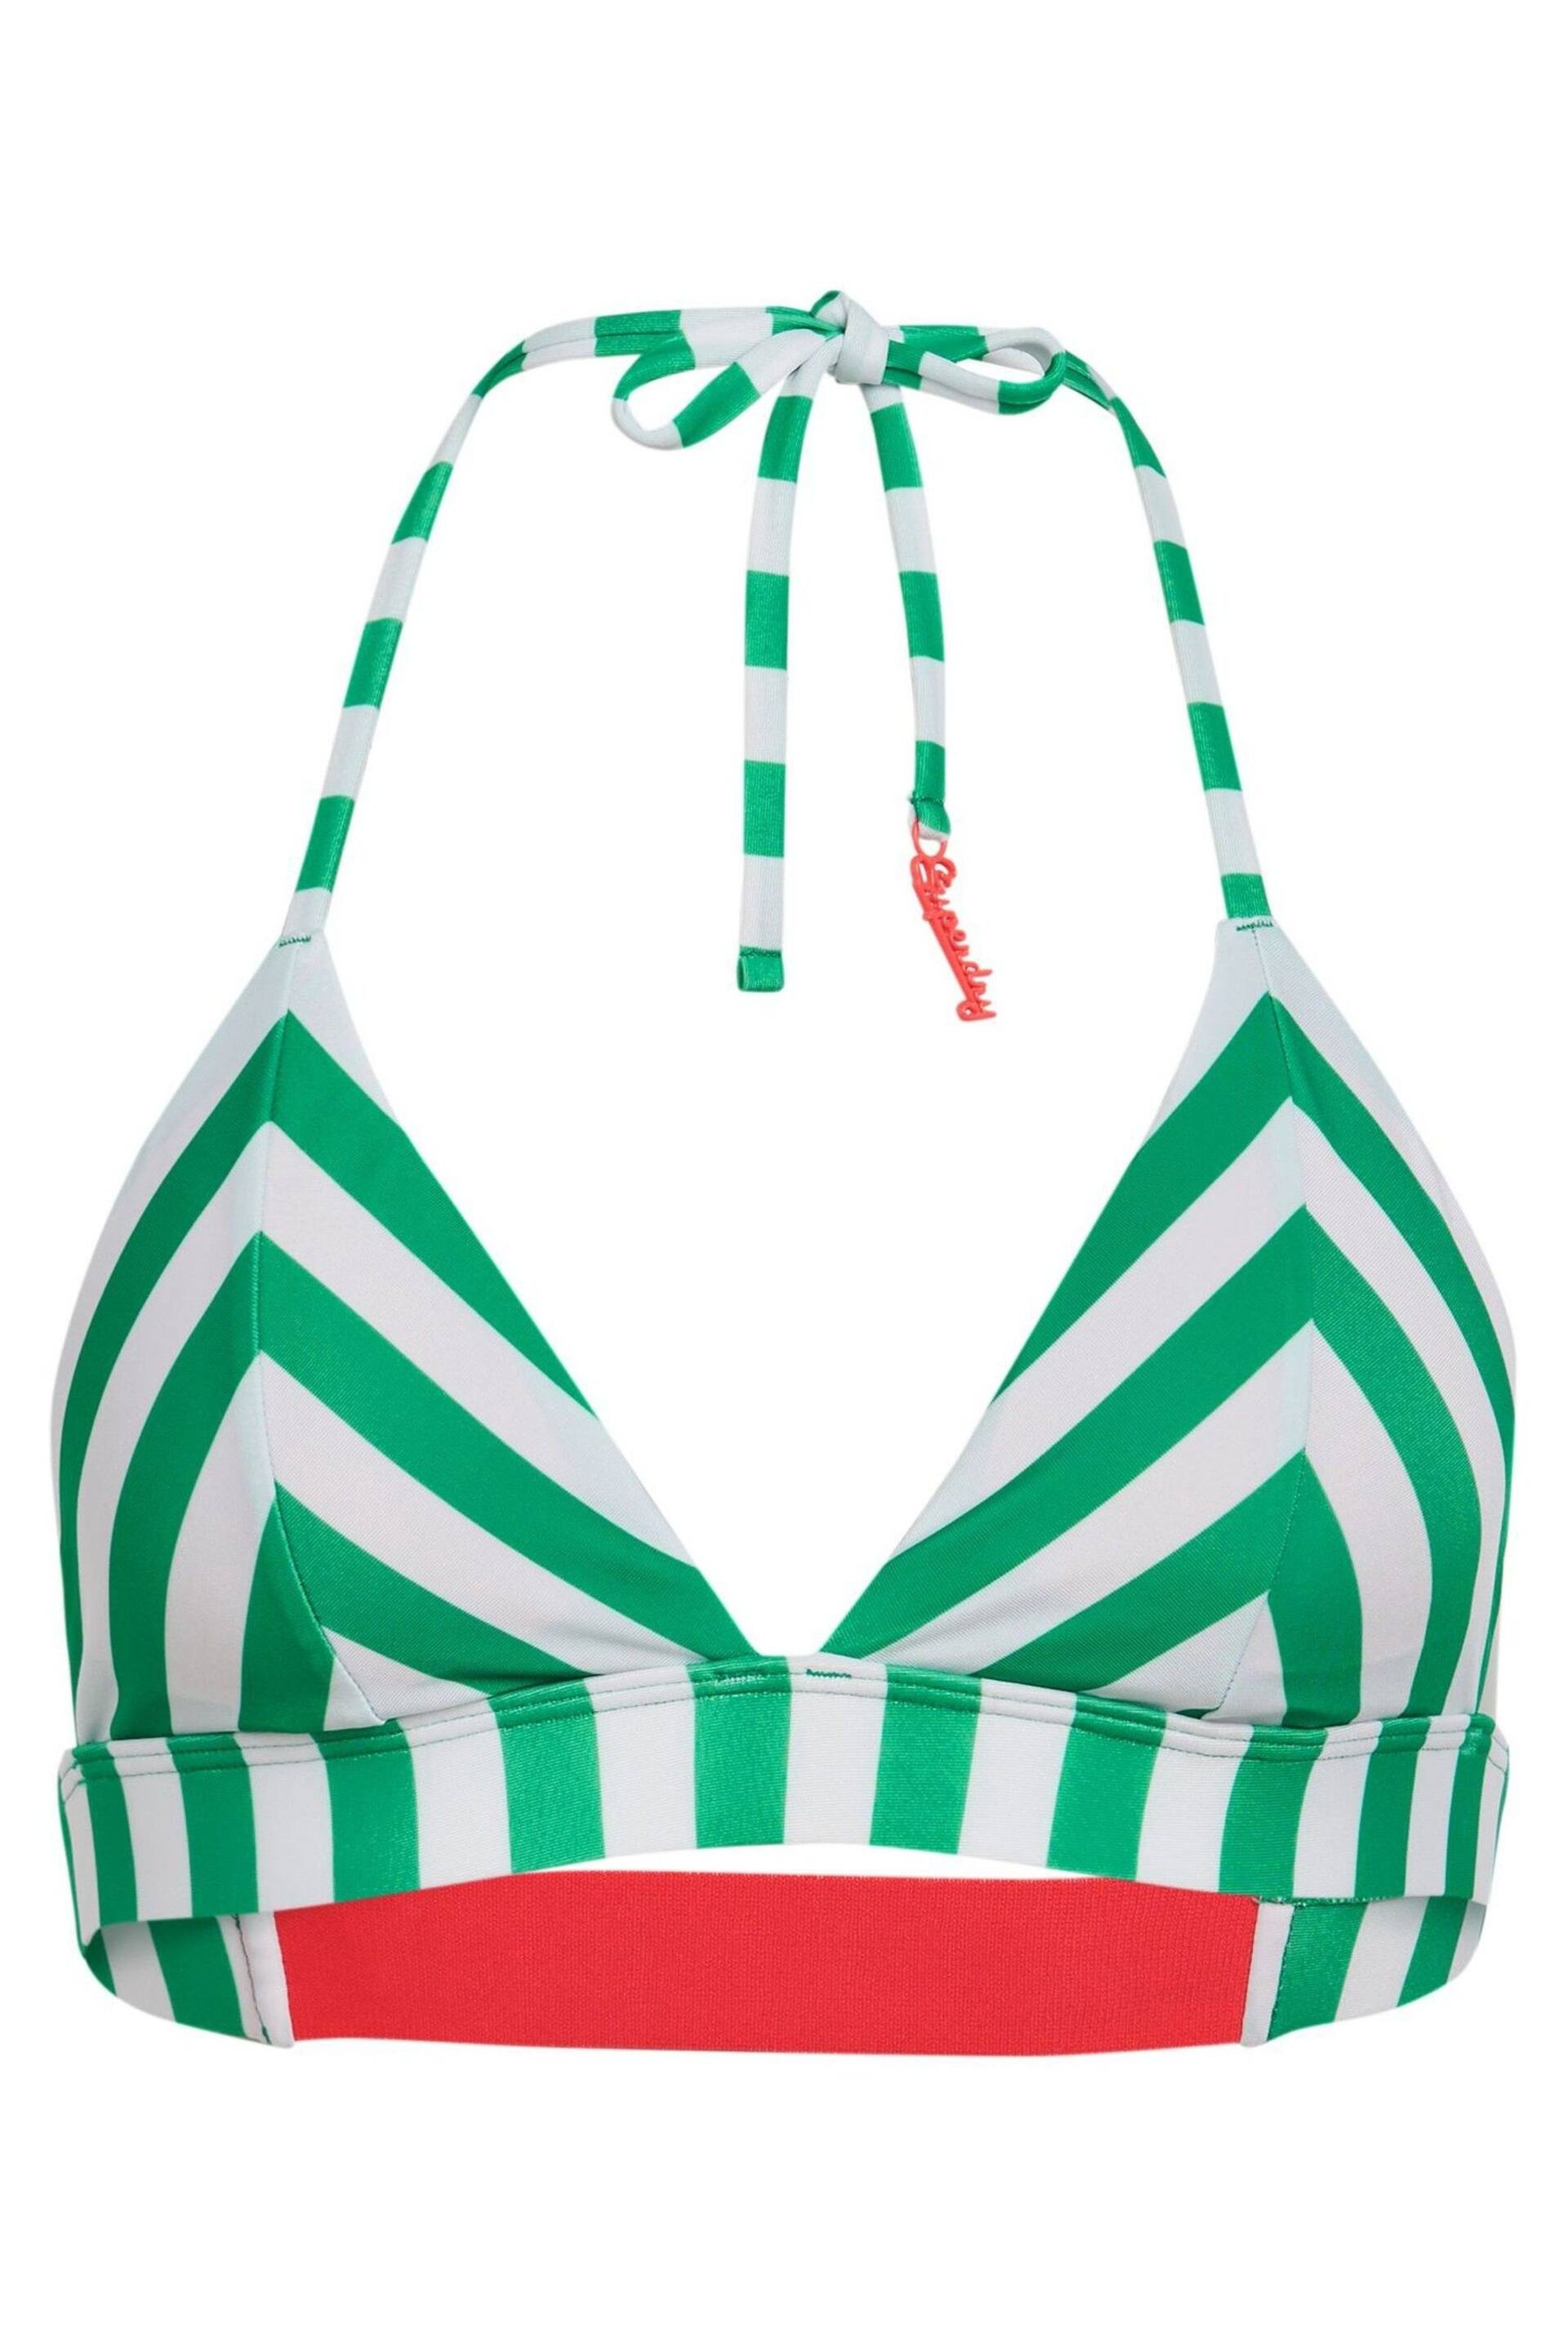 Superdry Green Stripe Triangle Bikini Top - Image 5 of 5